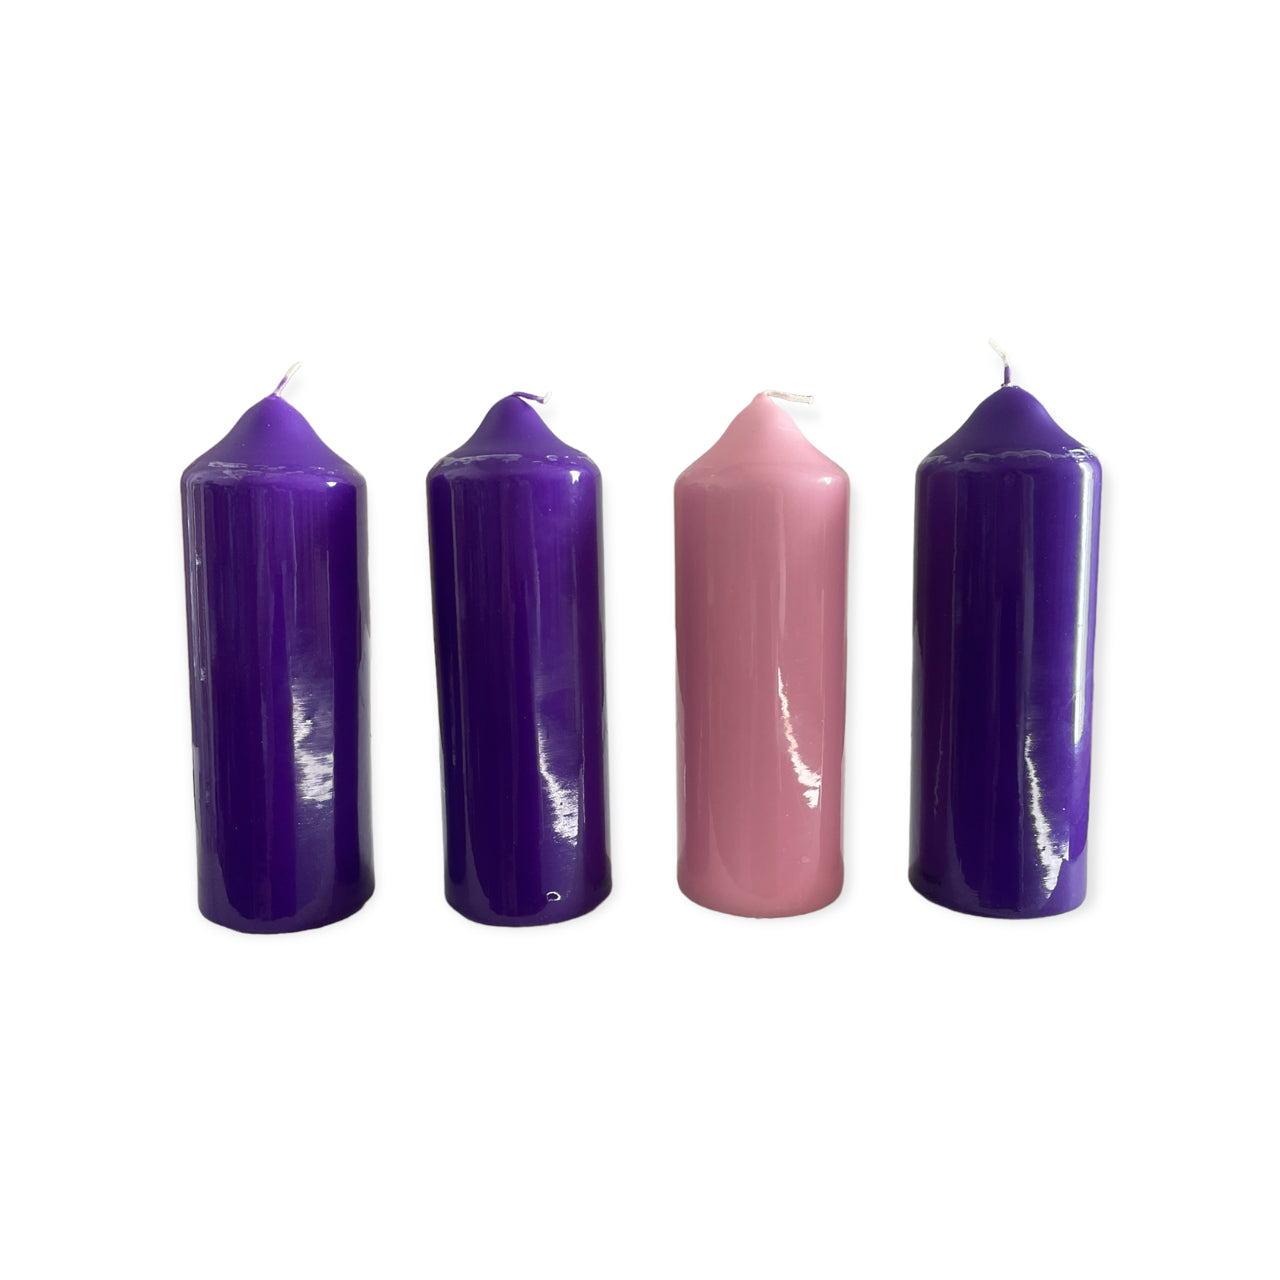 Kit candele Avvento 7x20 viola e rosa